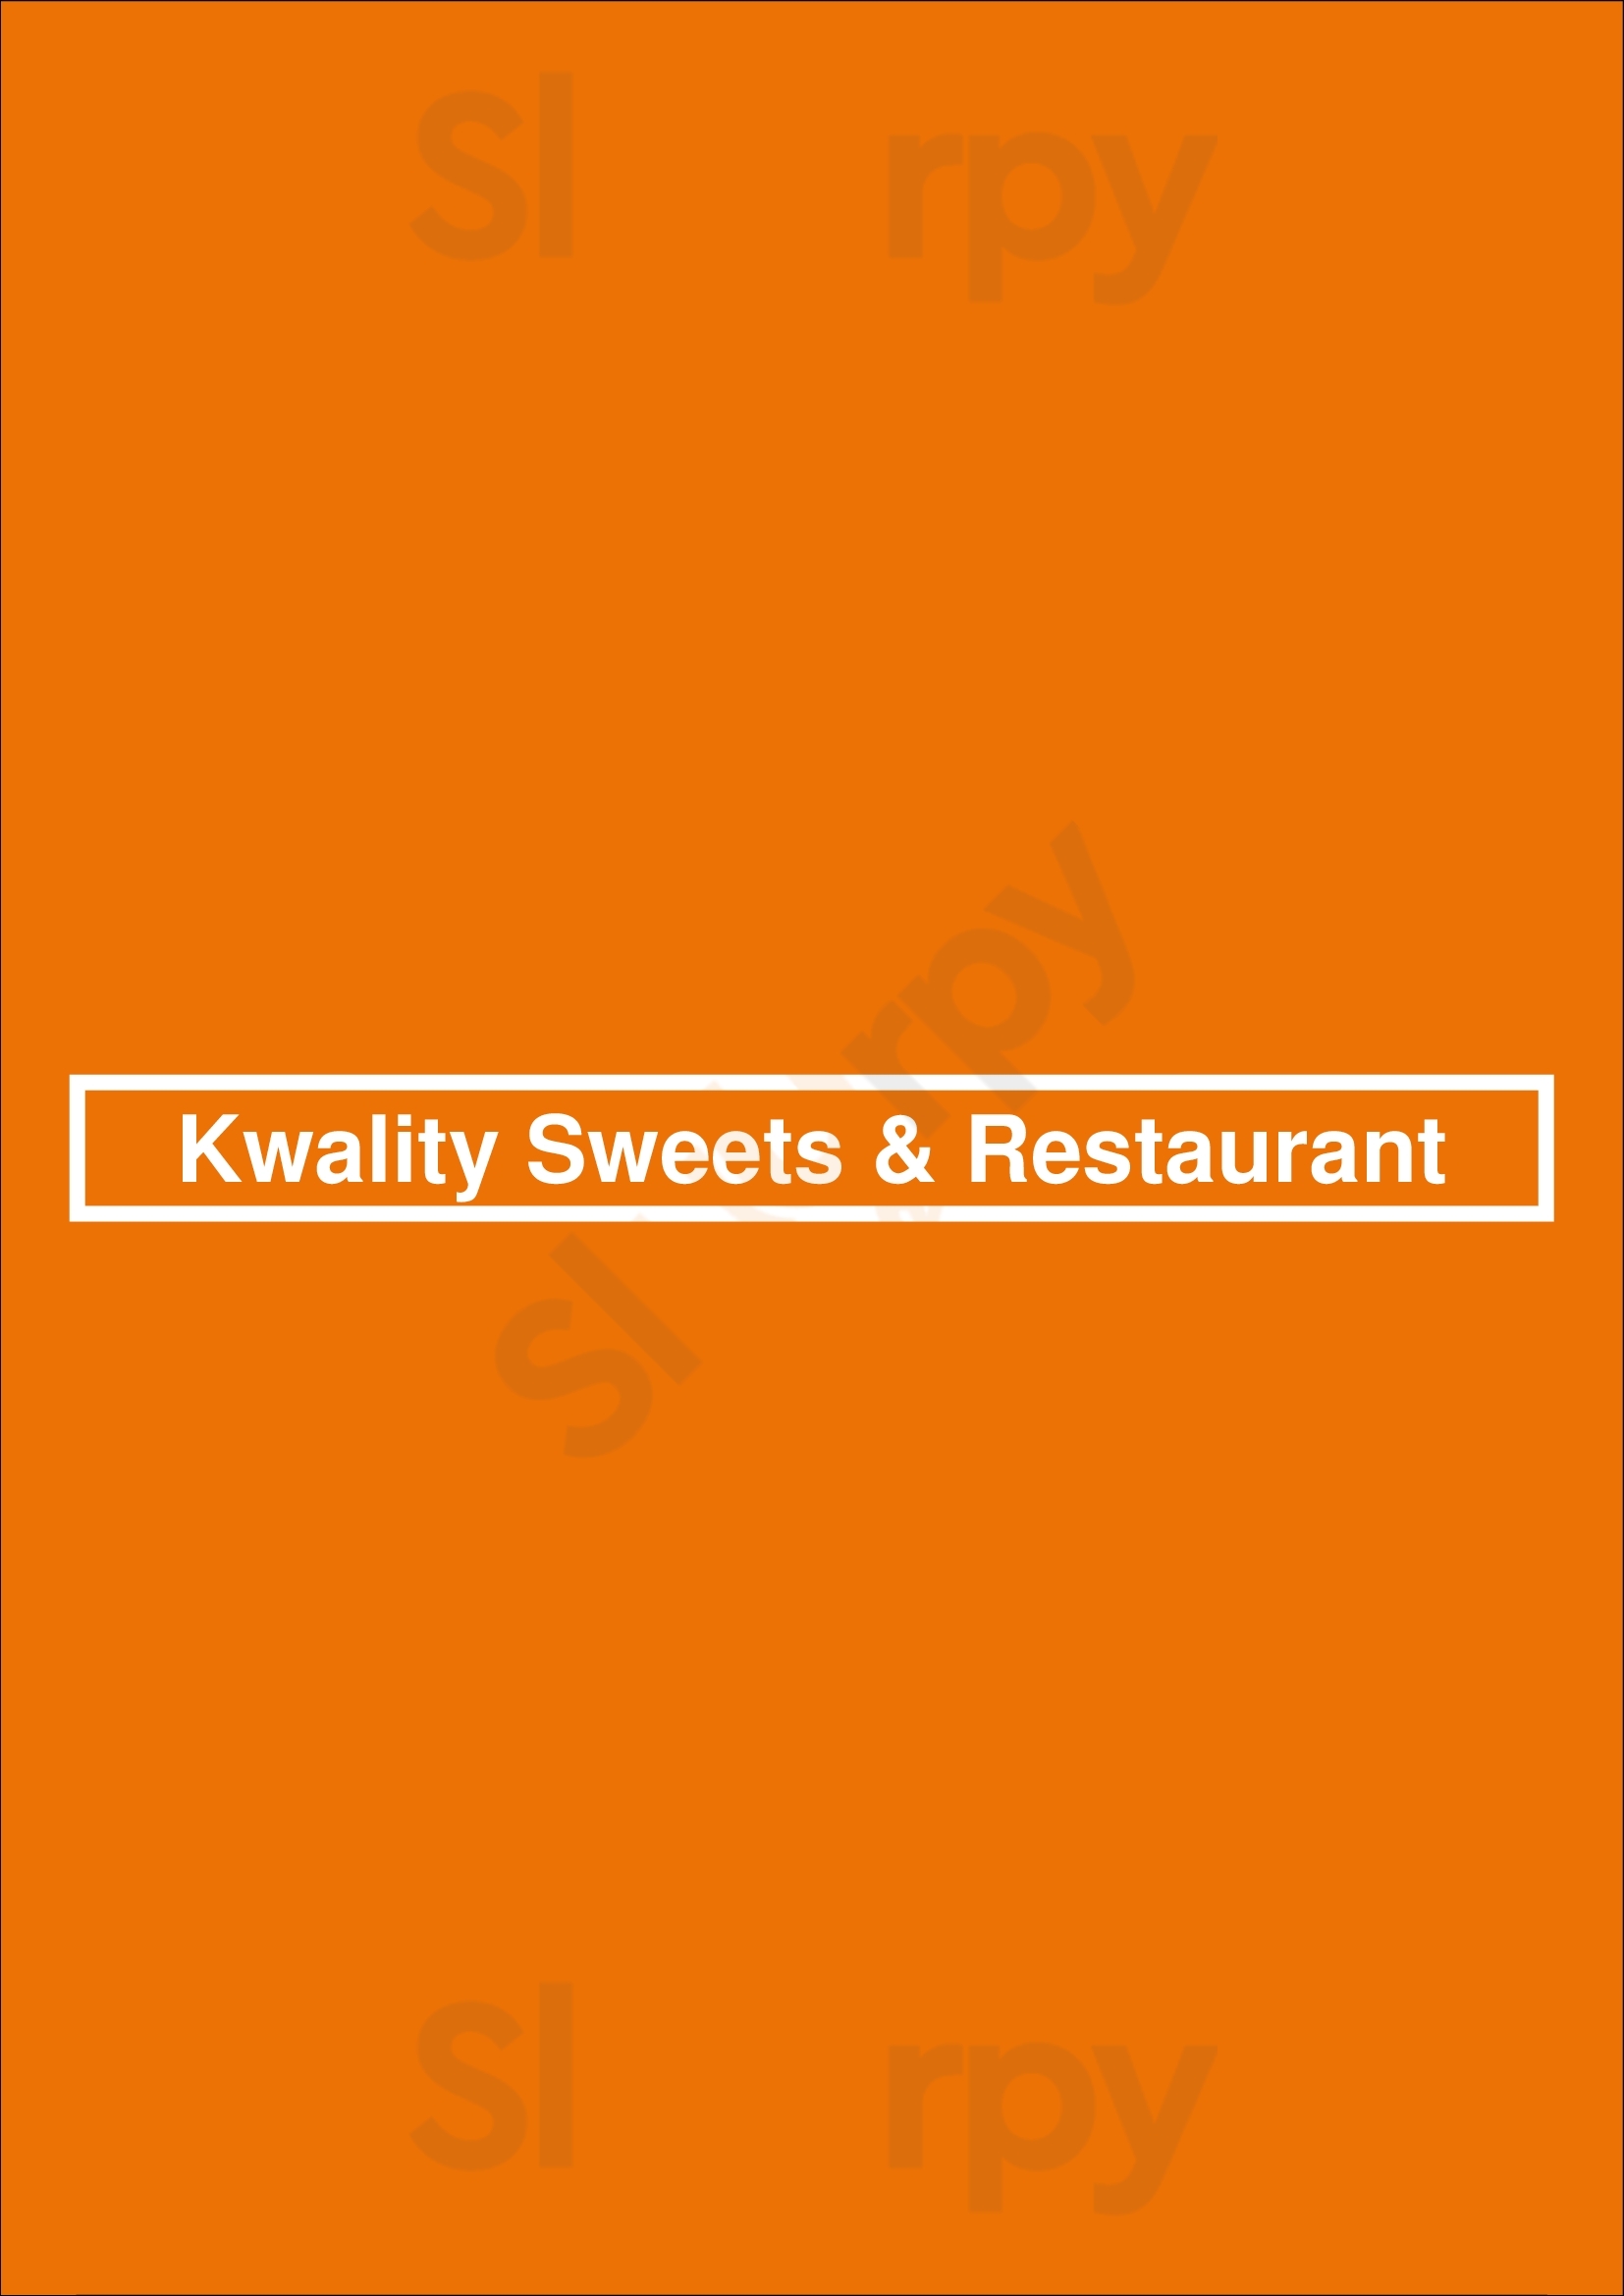 Kwality Sweets & Restaurant Brampton Menu - 1